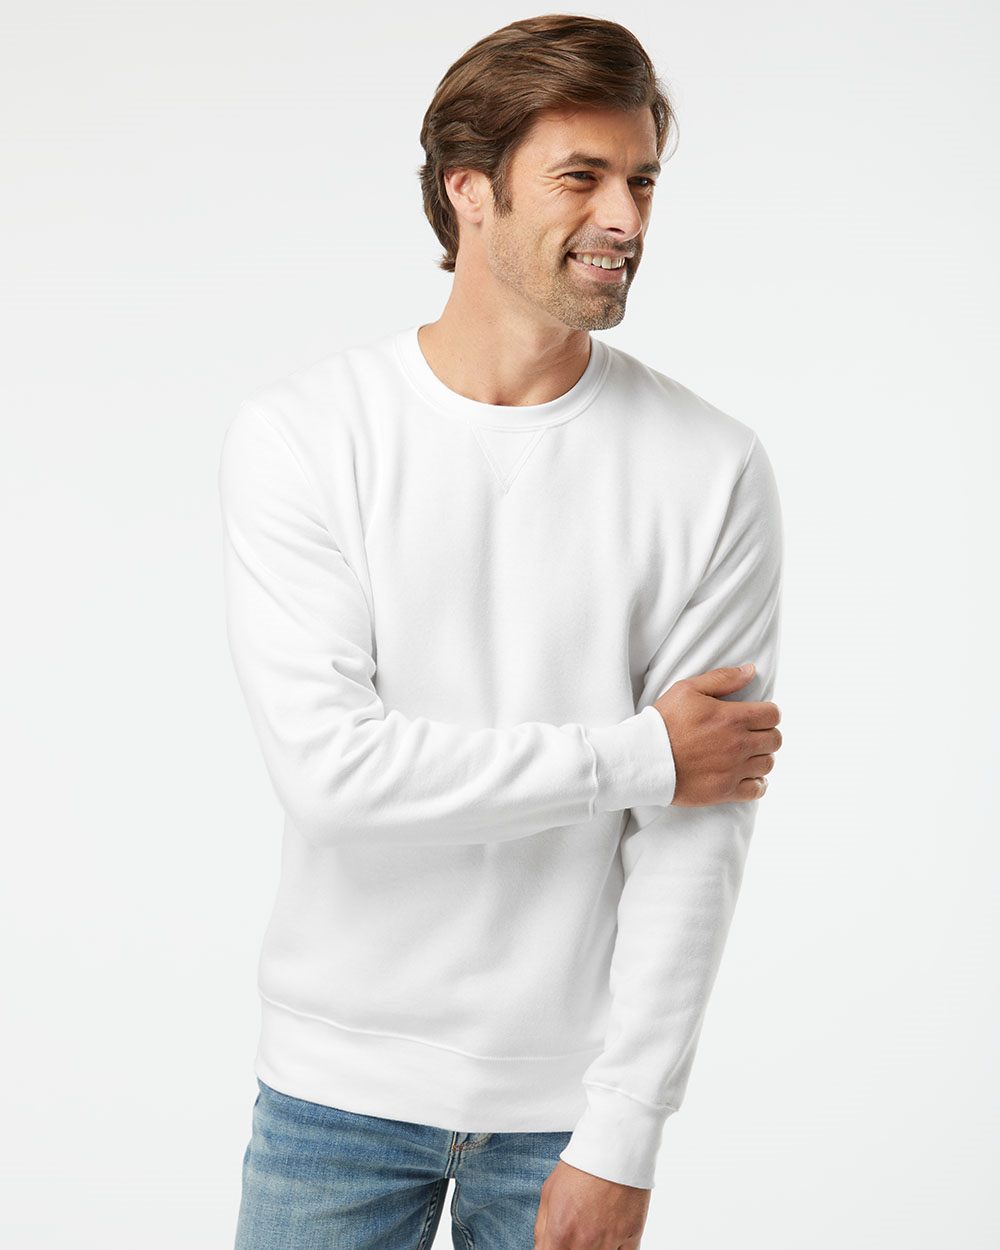 Russell Athletic Men's Cotton Rich Fleece Sweatshirt, Medium Grey Heather,  XL at  Men's Clothing store